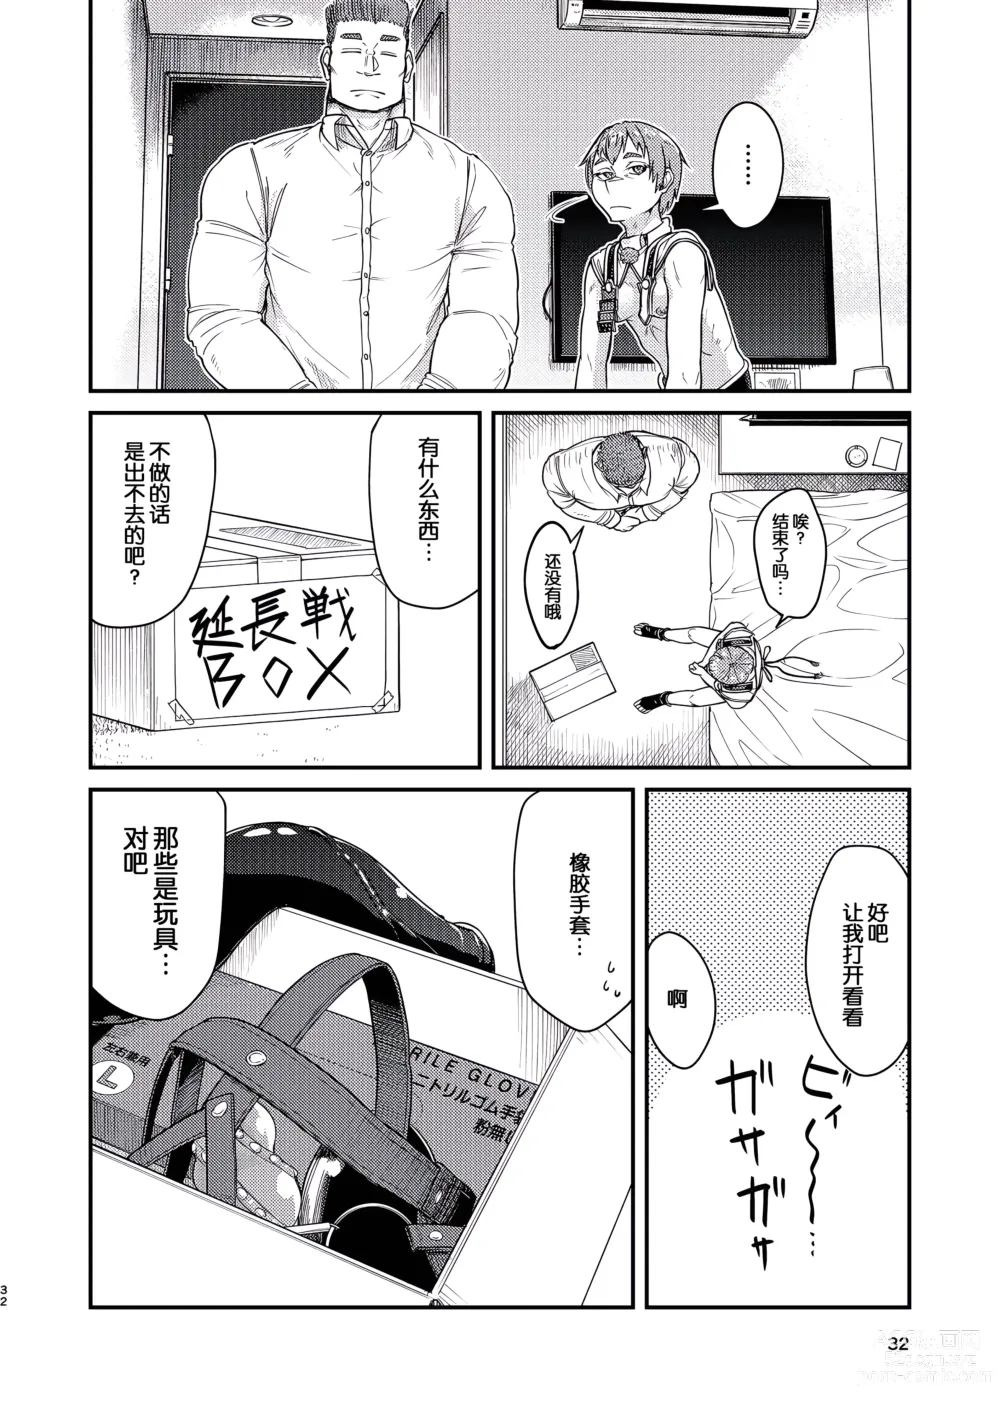 Page 32 of doujinshi MHD-02